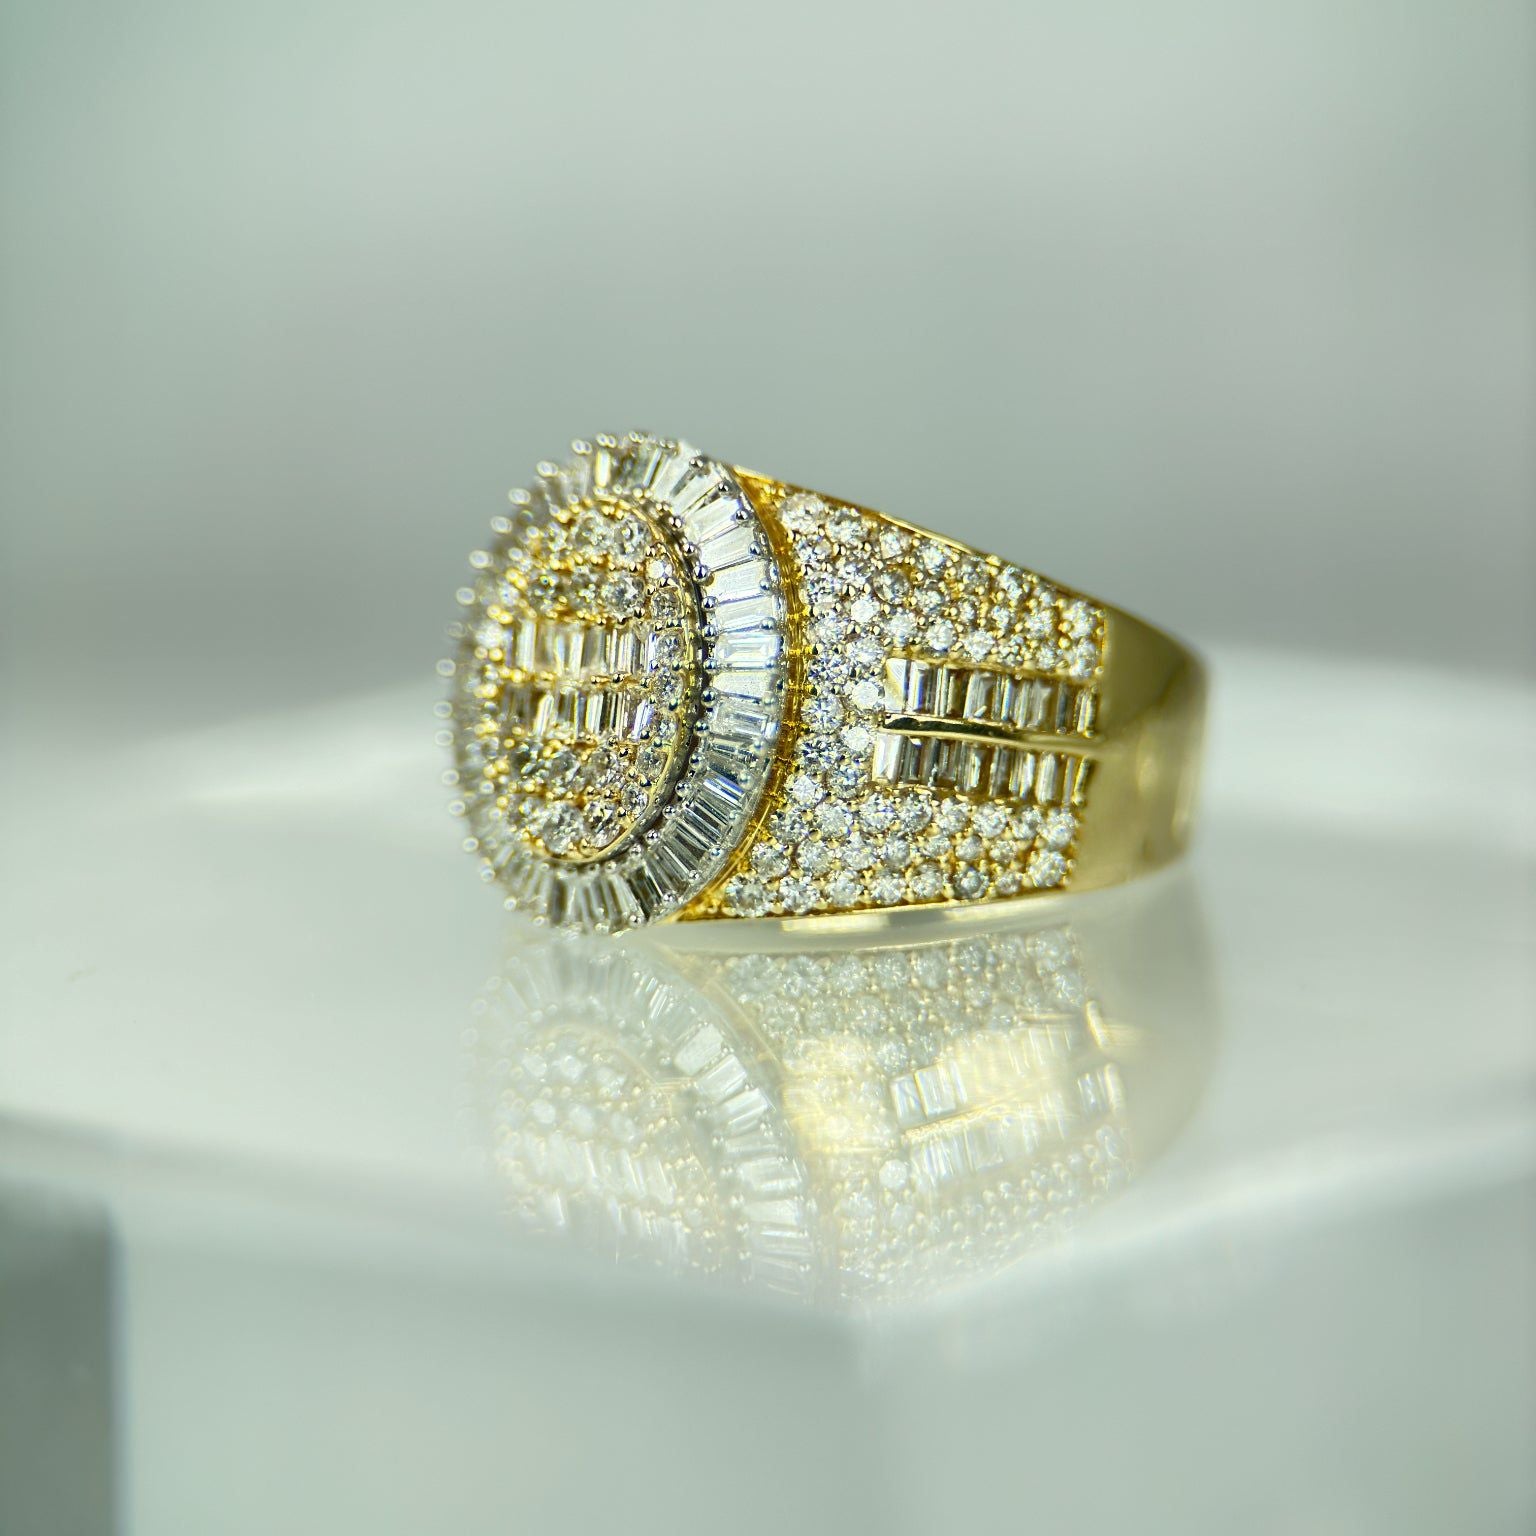 DR1198 - 14K Yellow Gold - Cushion - Diamond - Men's Diamond Rings